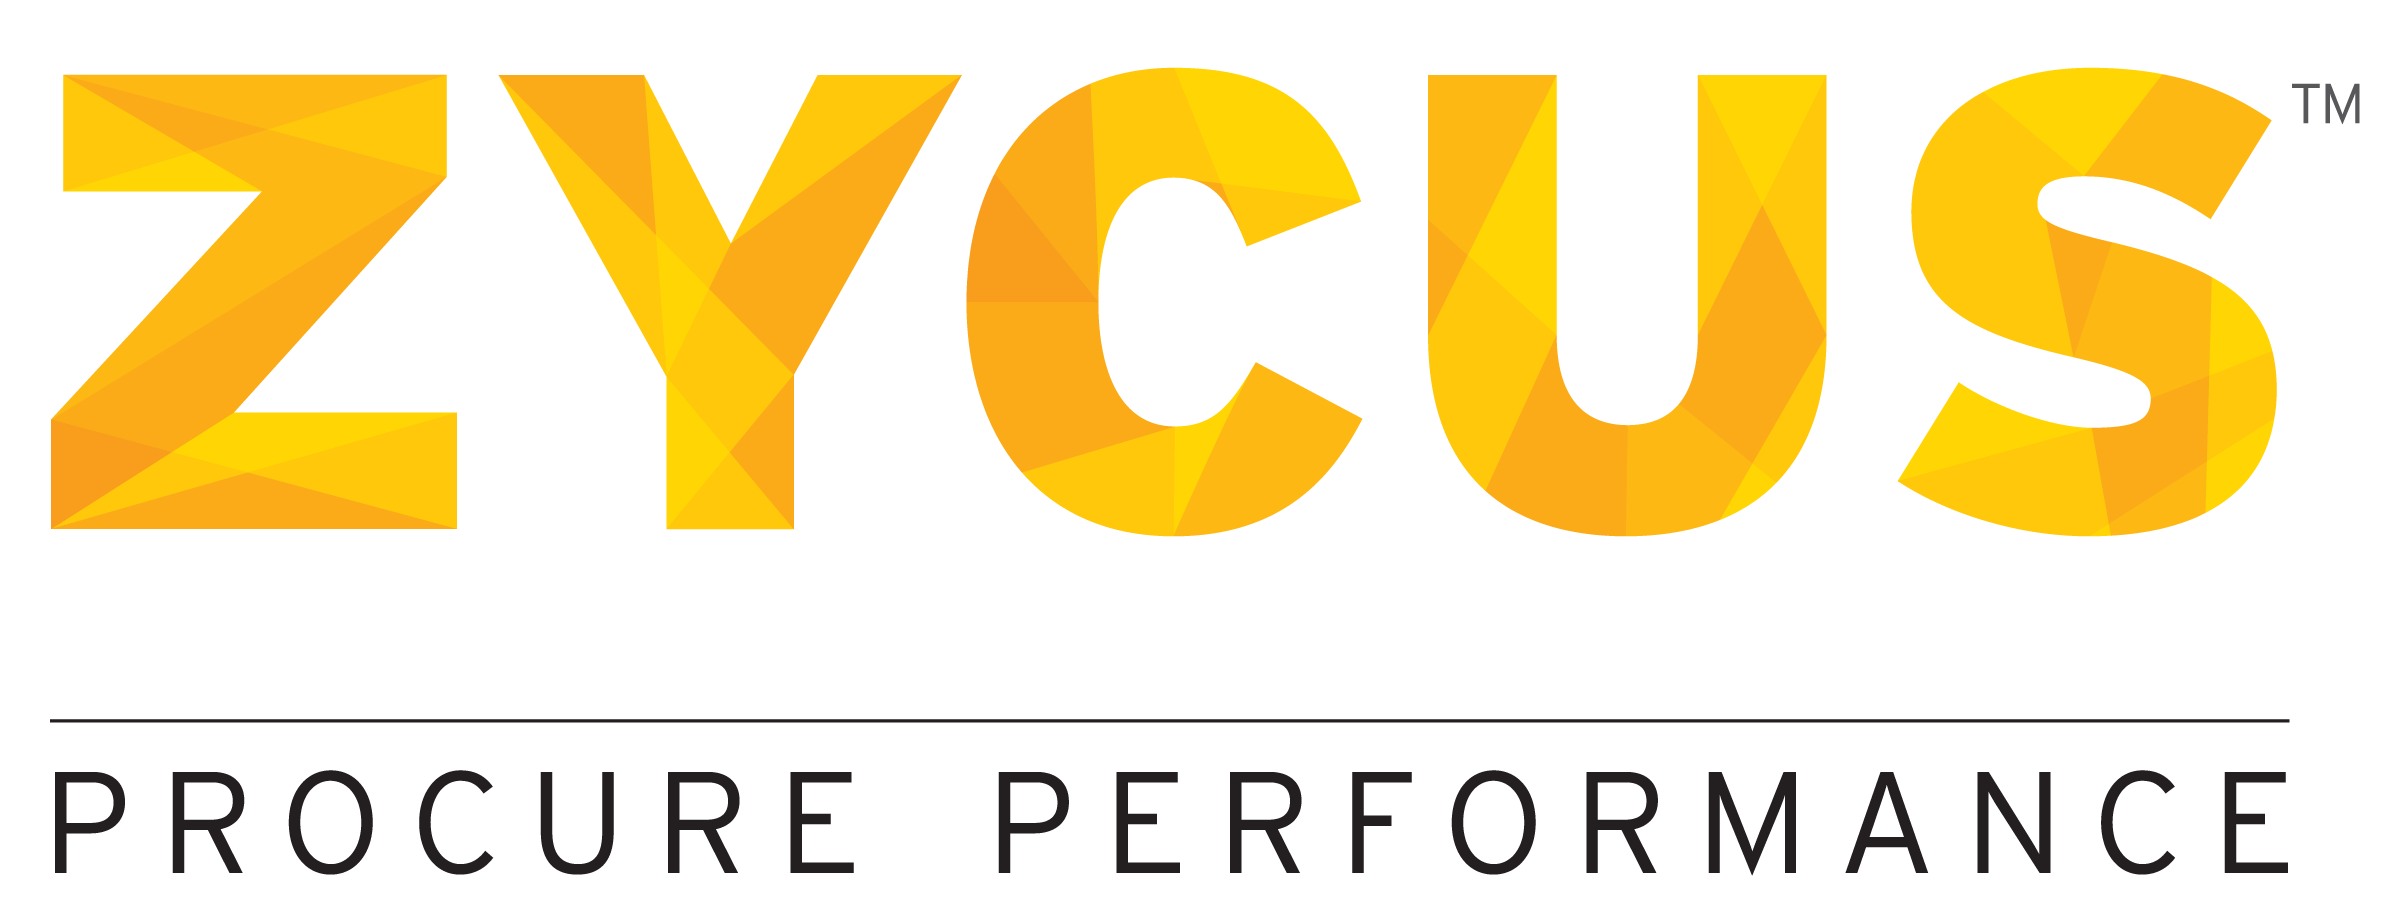 zycus logo big IT Voice | IT in Depth